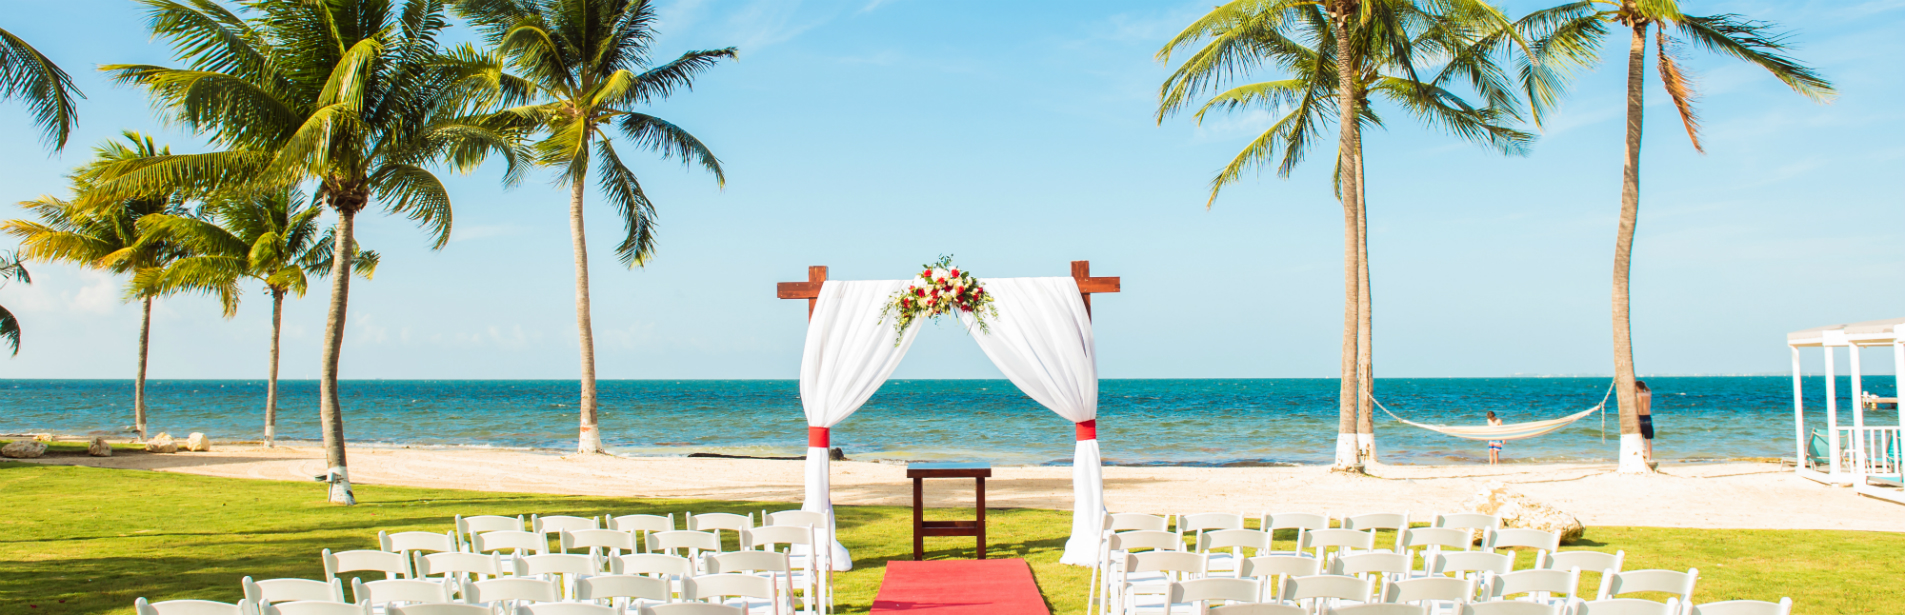 grand cayman north sound beach wedding venue